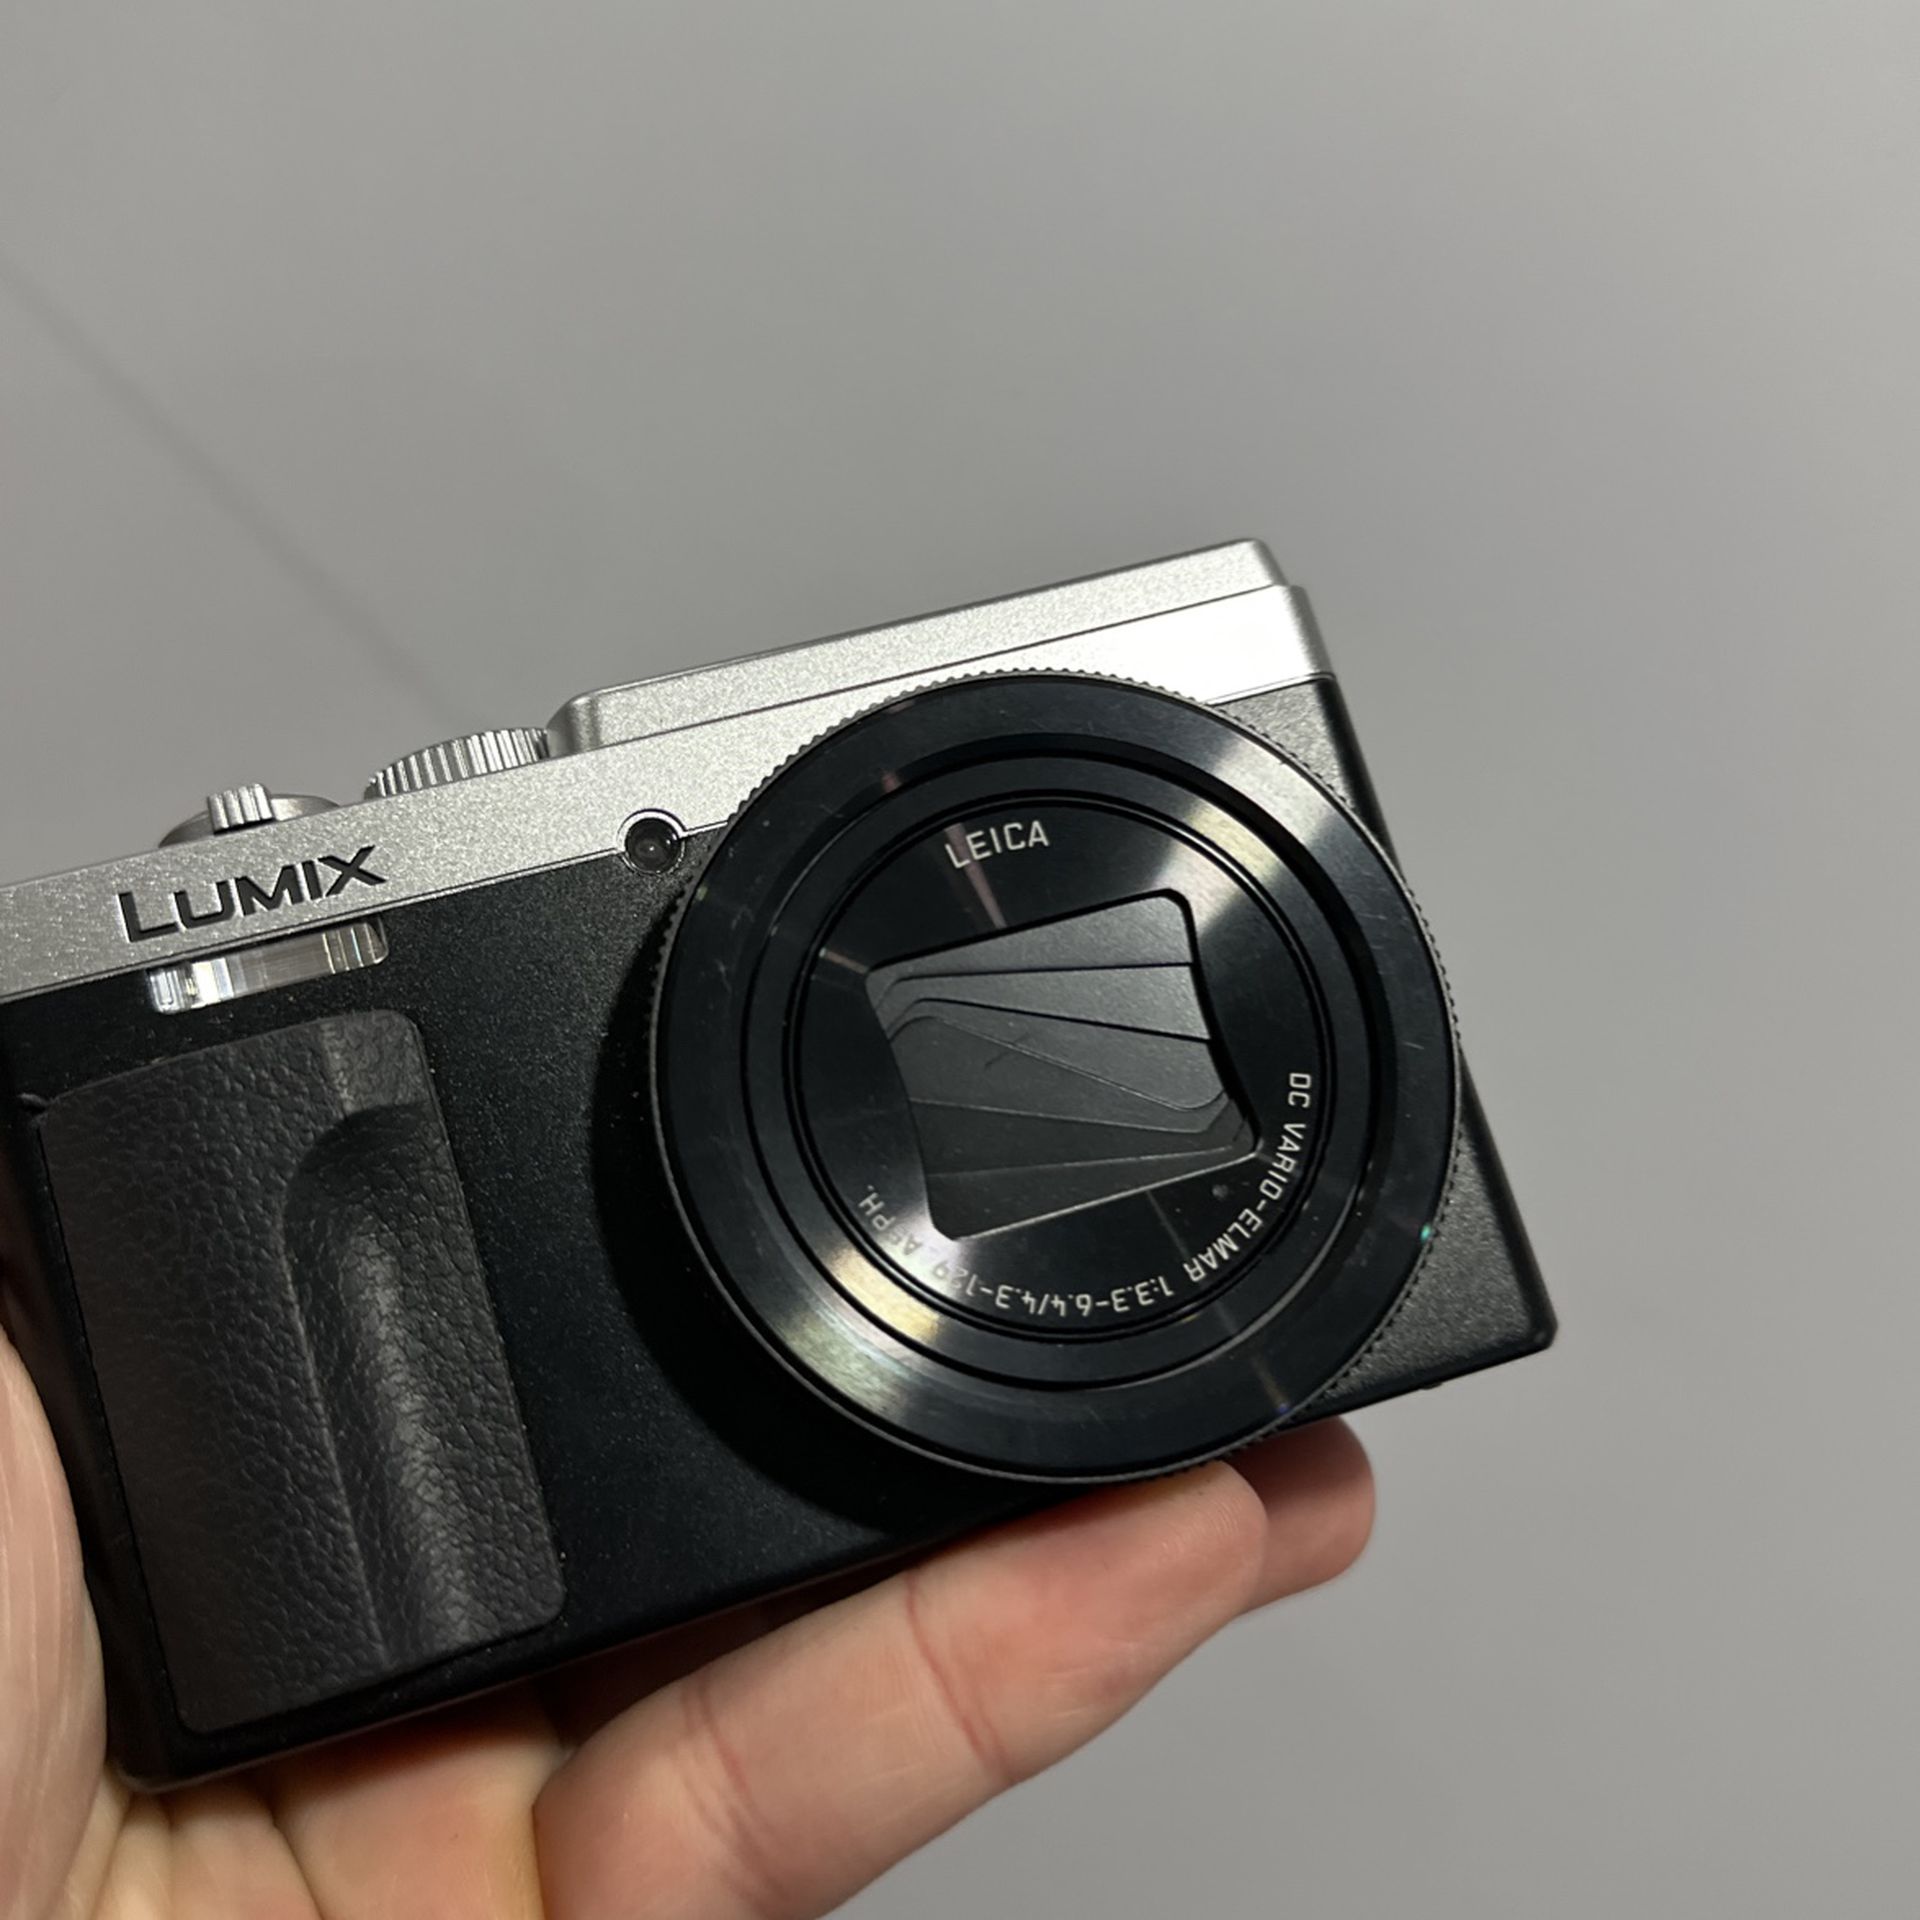 Horzel belofte Stereotype Panasonic LUMIX ZS80D 4K Digital Camera, 20.3MP 1/2.3-inch Sensor, 30X  Leica DC Vario-Elmar Lens, F3.3-6.4 Aperture, WiFi, Hybrid O.I.S.  Stabilization for Sale in Fort Lauderdale, FL - OfferUp